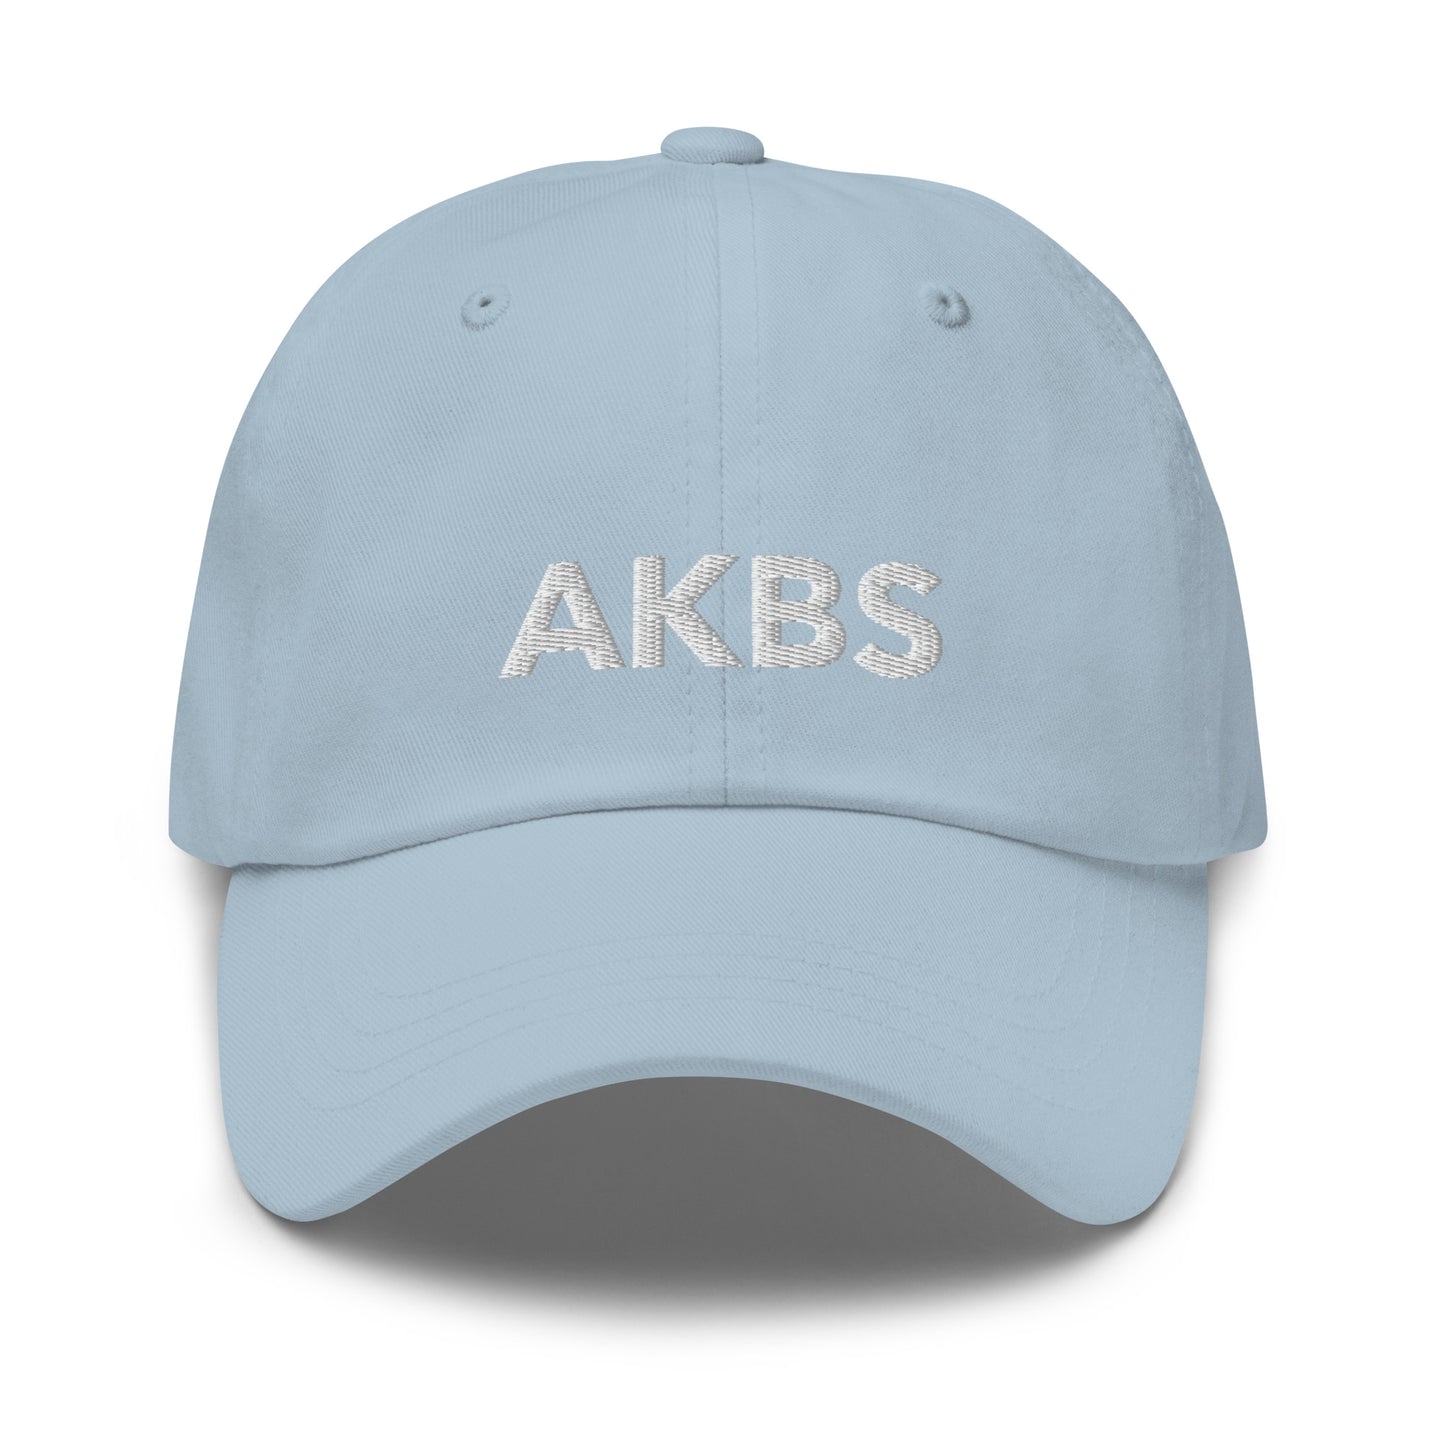 AKBS Cap